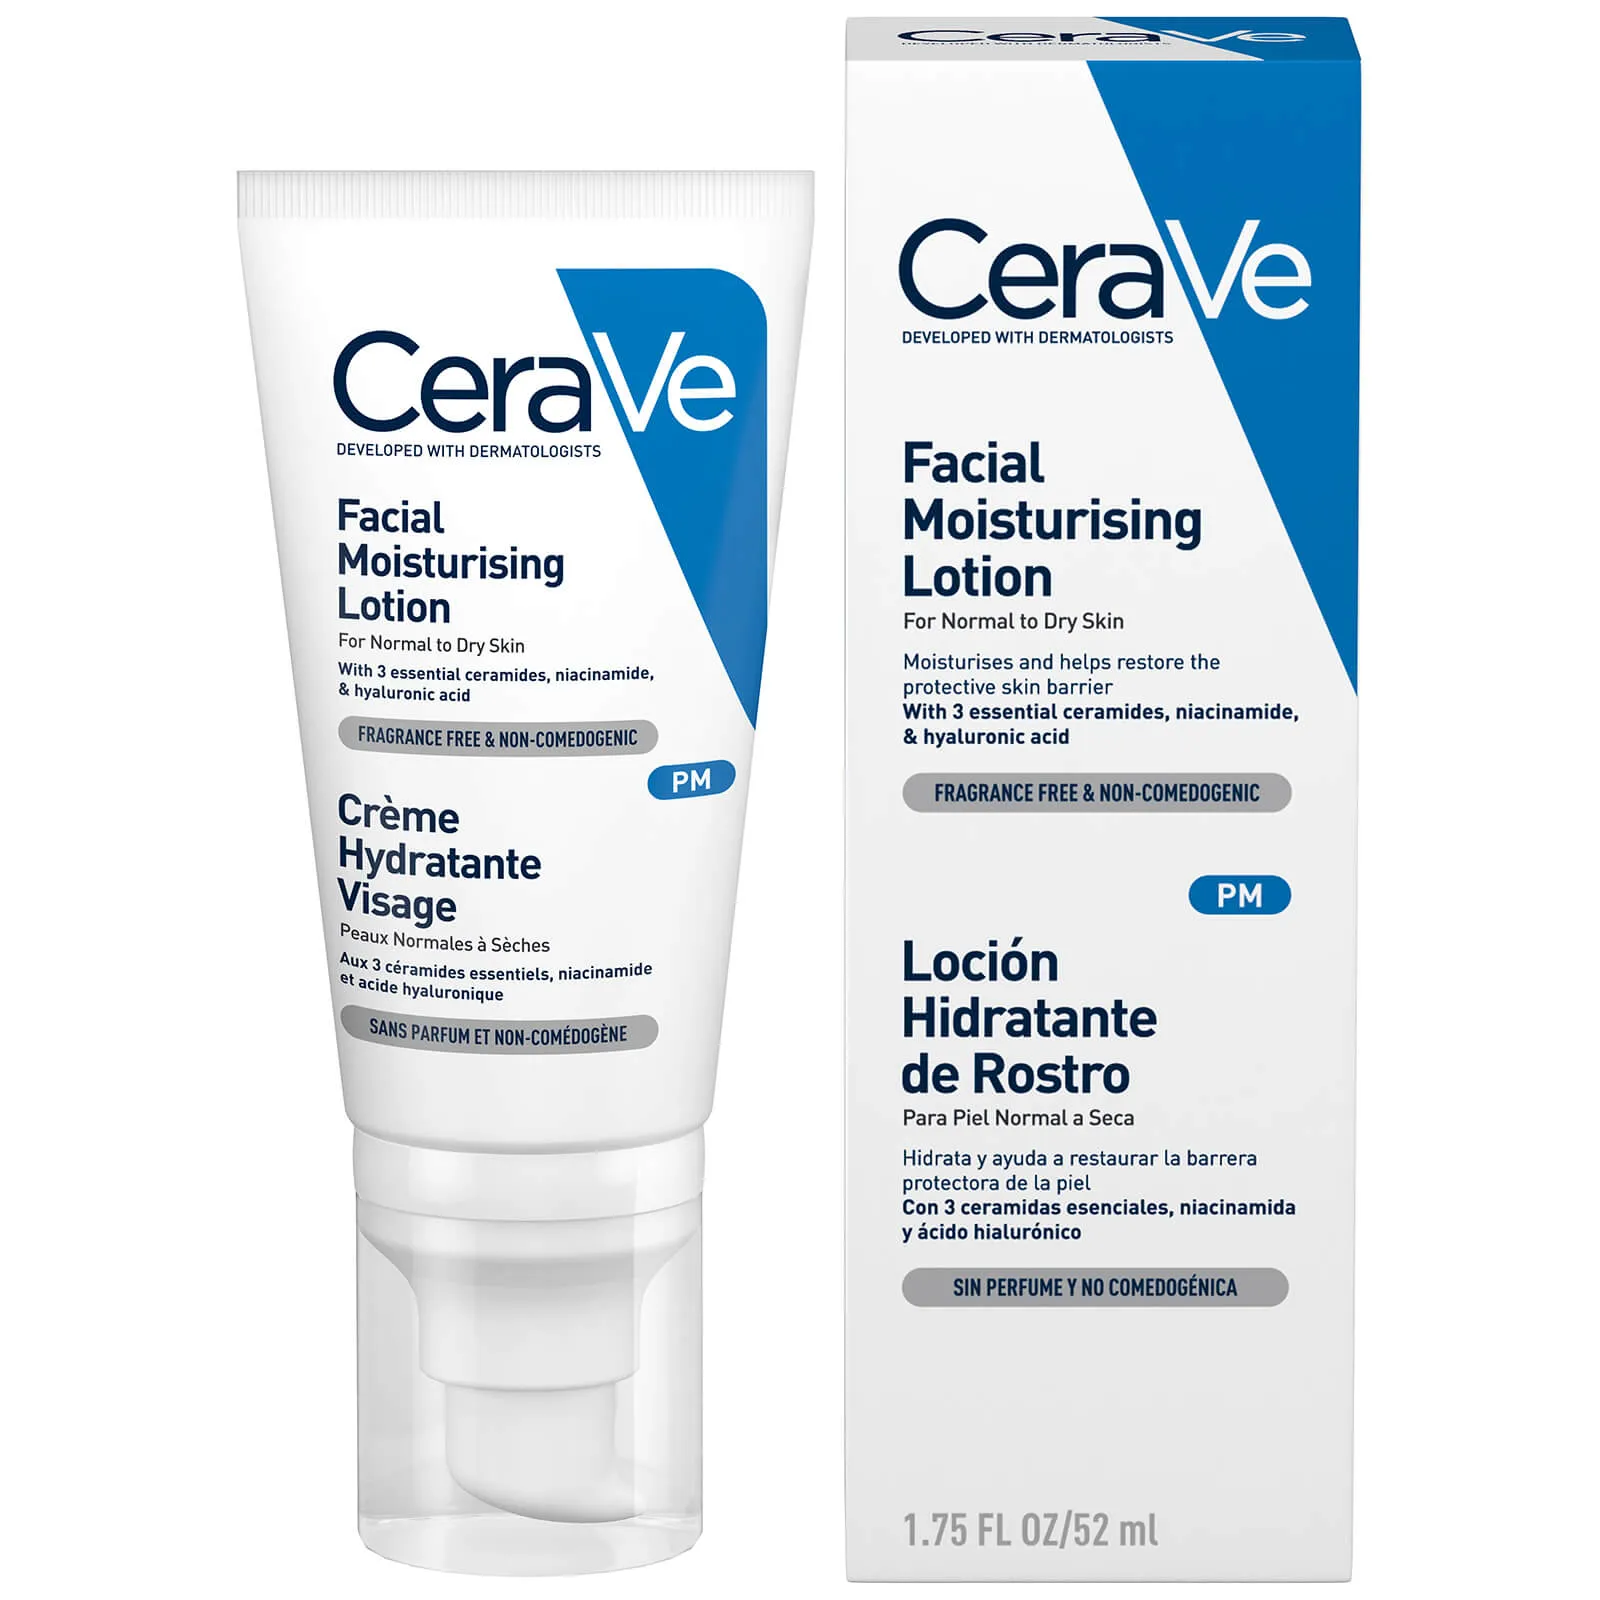 Cerave Facial Moisturising Lotion - PM 52ml